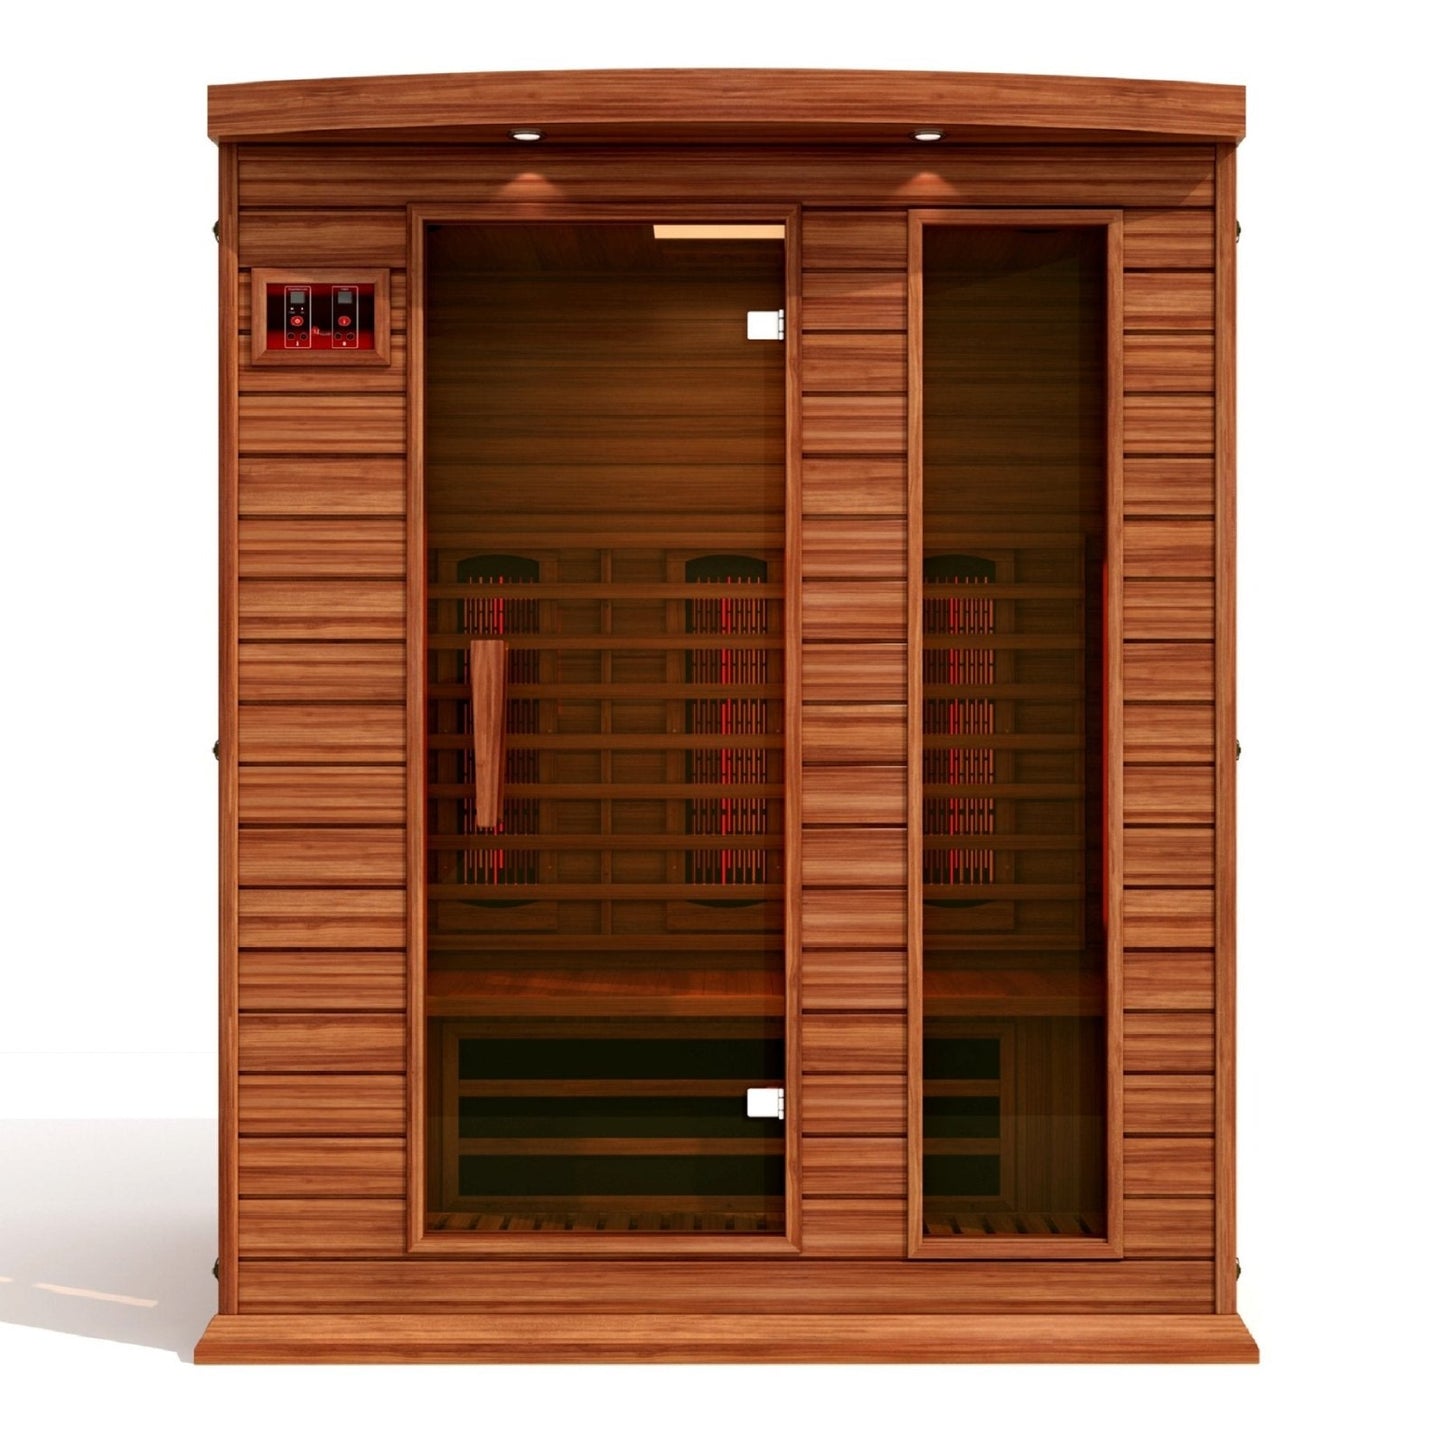 Golden Designs Near Zero EMF 3-Person Maxxus Full Spectrum FAR Infrared Sauna with Red Cedar Wood | Model: MX-M306-01-FS CED - MX-M306-01-FS CED